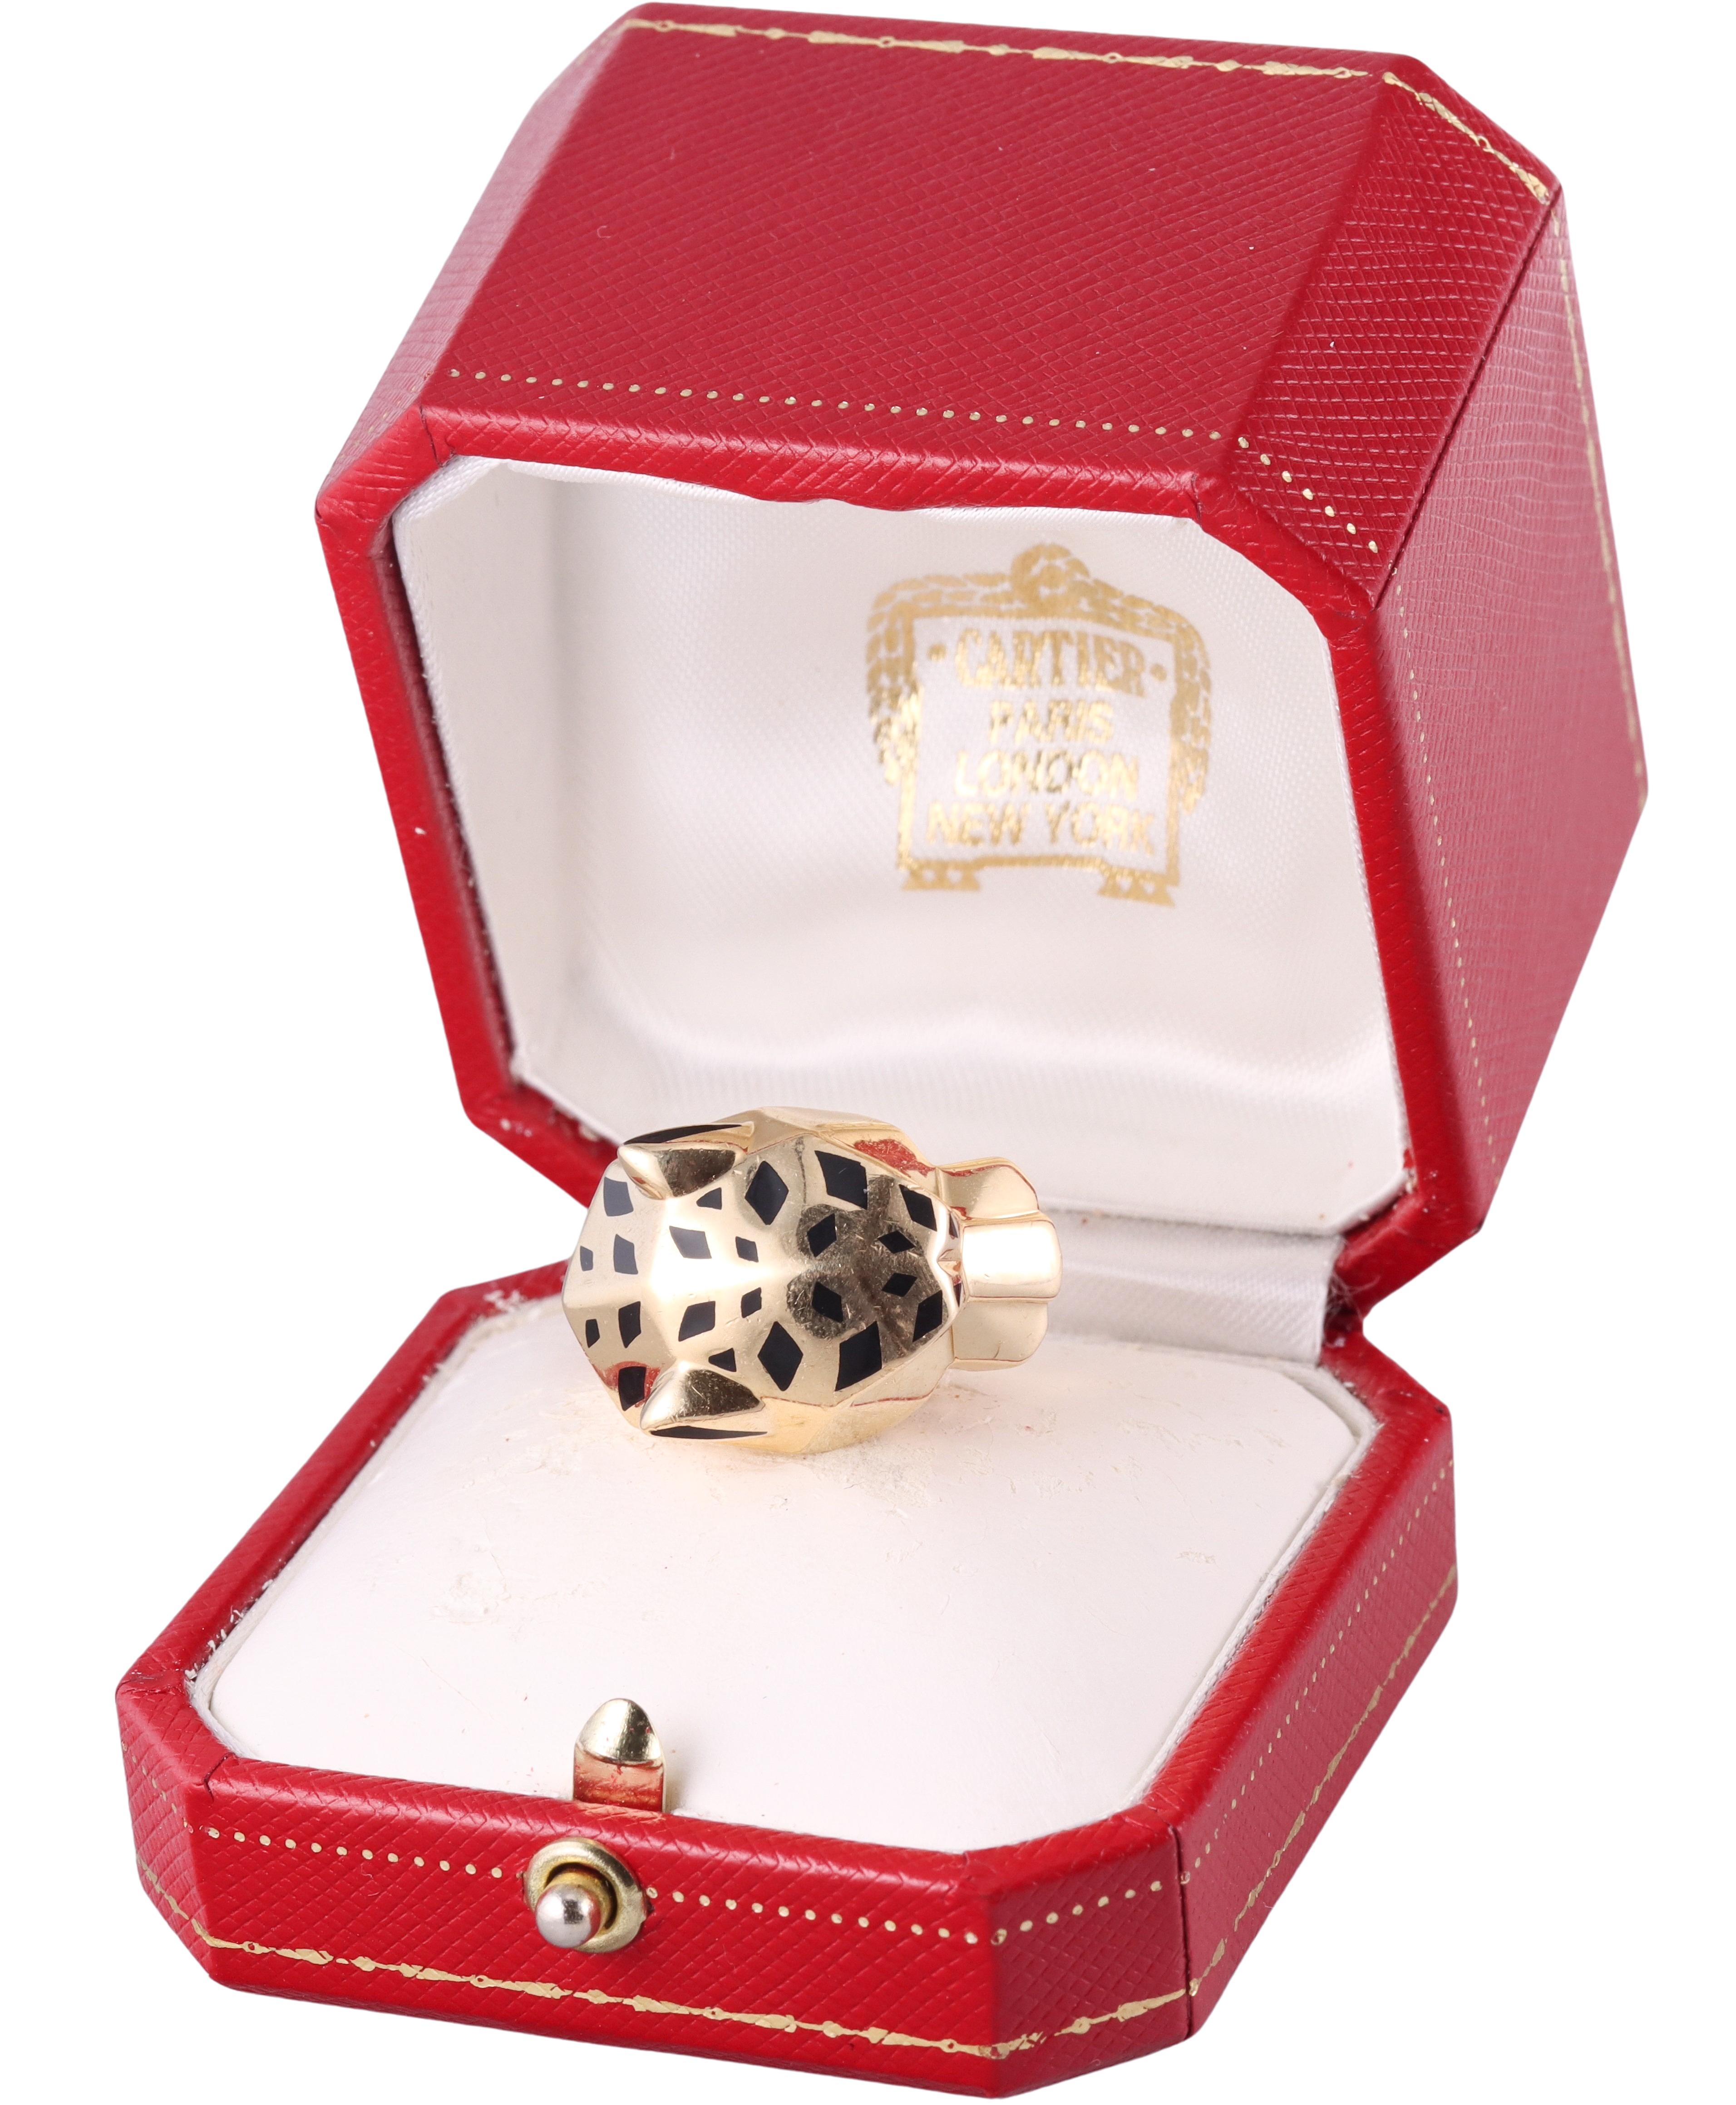 Panthere de Cartier Tsavorite Enamel Gold Ring For Sale 3